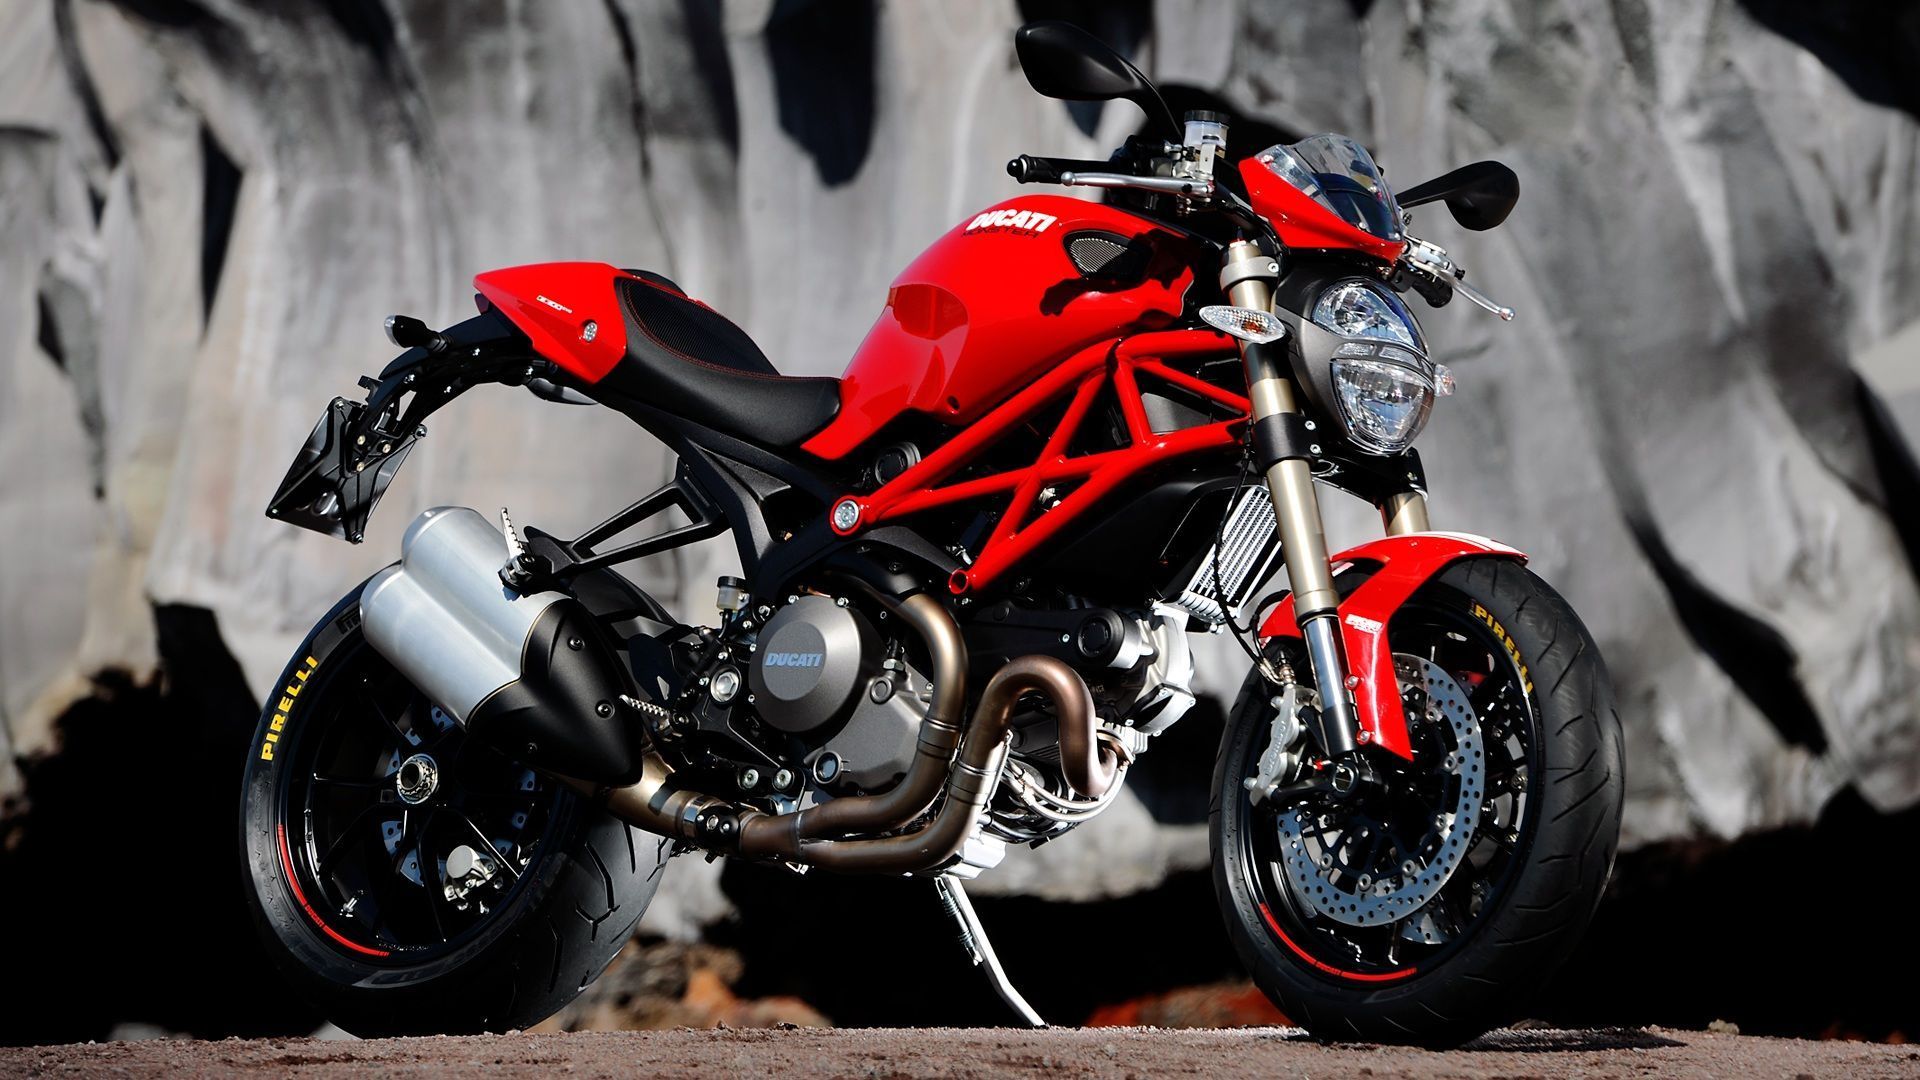 2015 Ducati Bike Wallpaper | 2015 Ducati diavel Photos | Cool ...